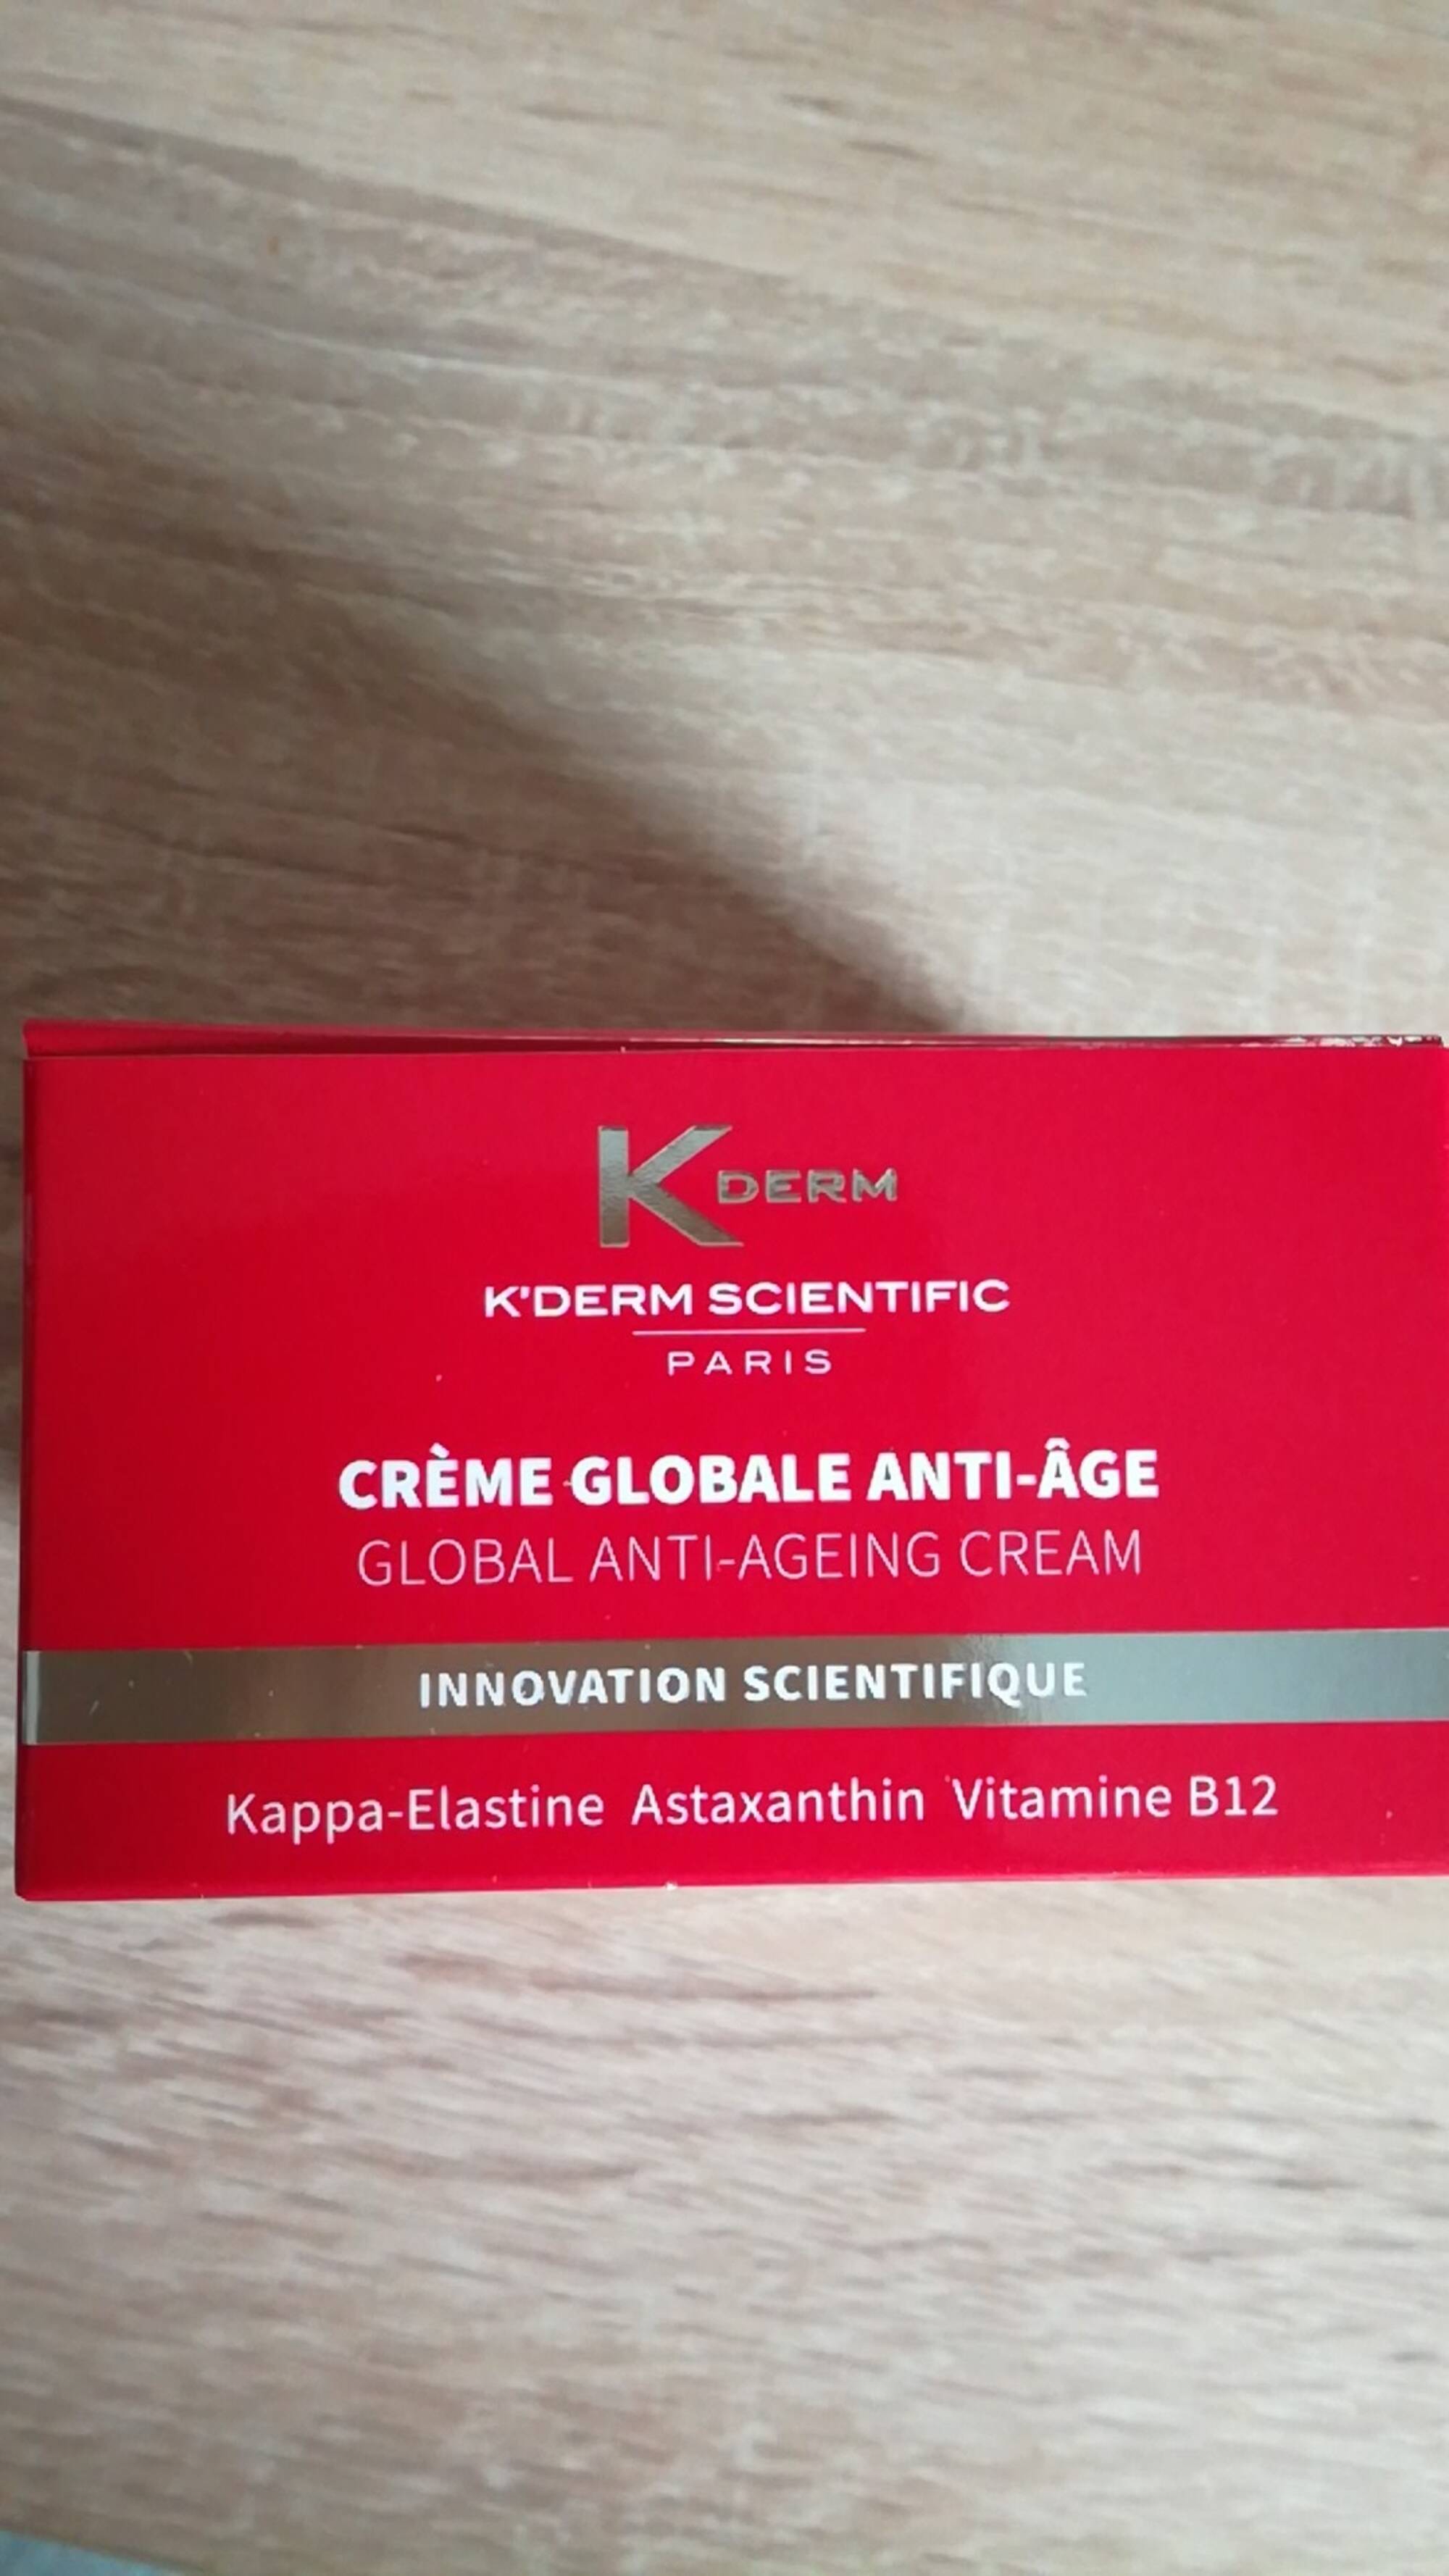 K DERM - Crème Globale Anti-Âge